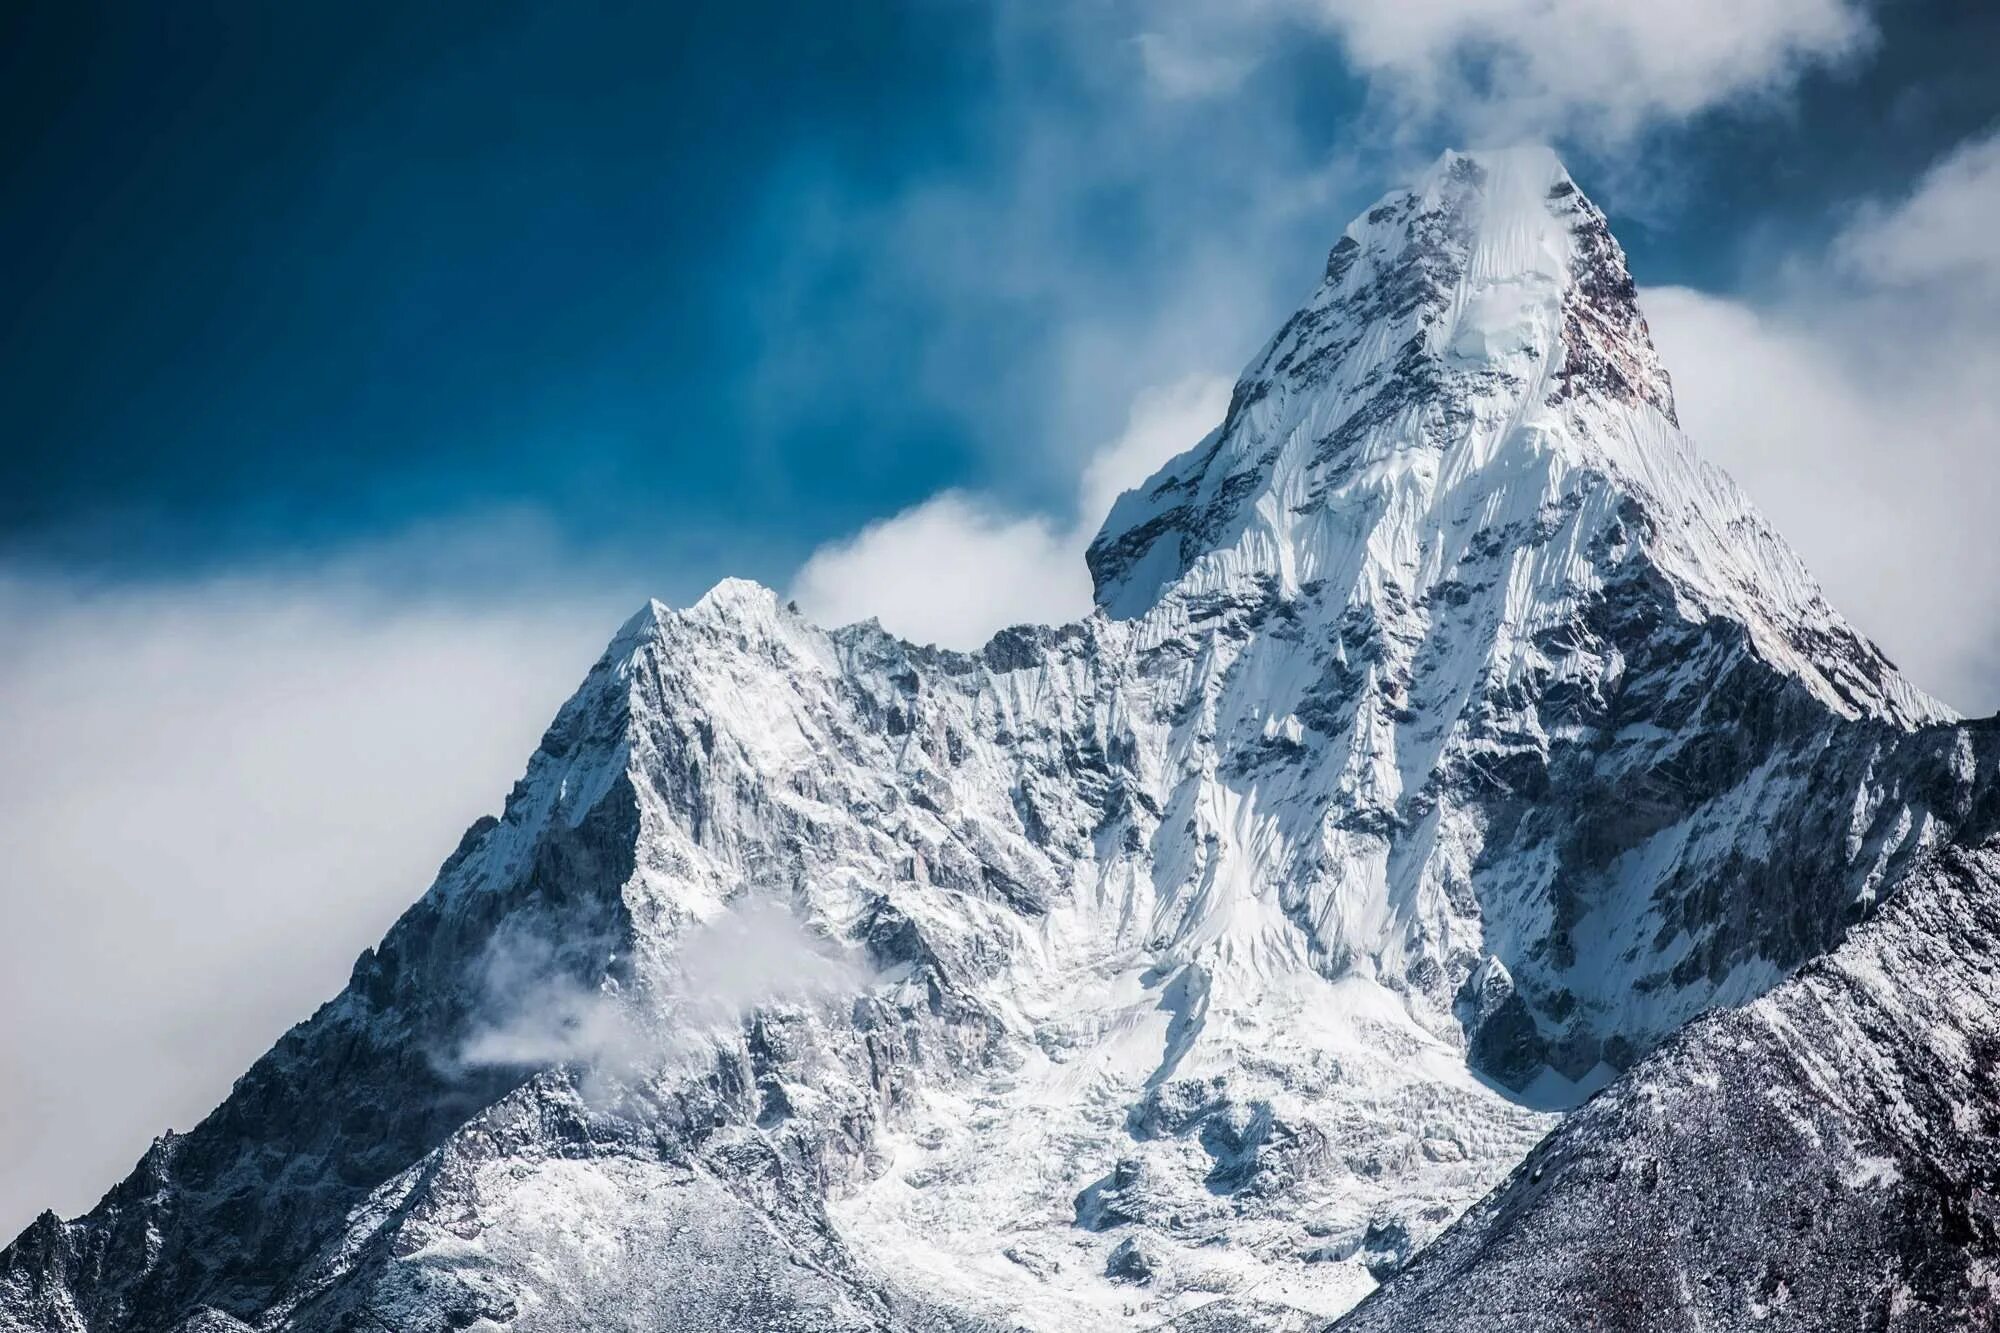 Higher mountains. Гималаи Эверест Джомолунгма. Ама Даблам гора. Гора Джомолунгма (Эверест), гора Монблан.. Ама Даблам пик.